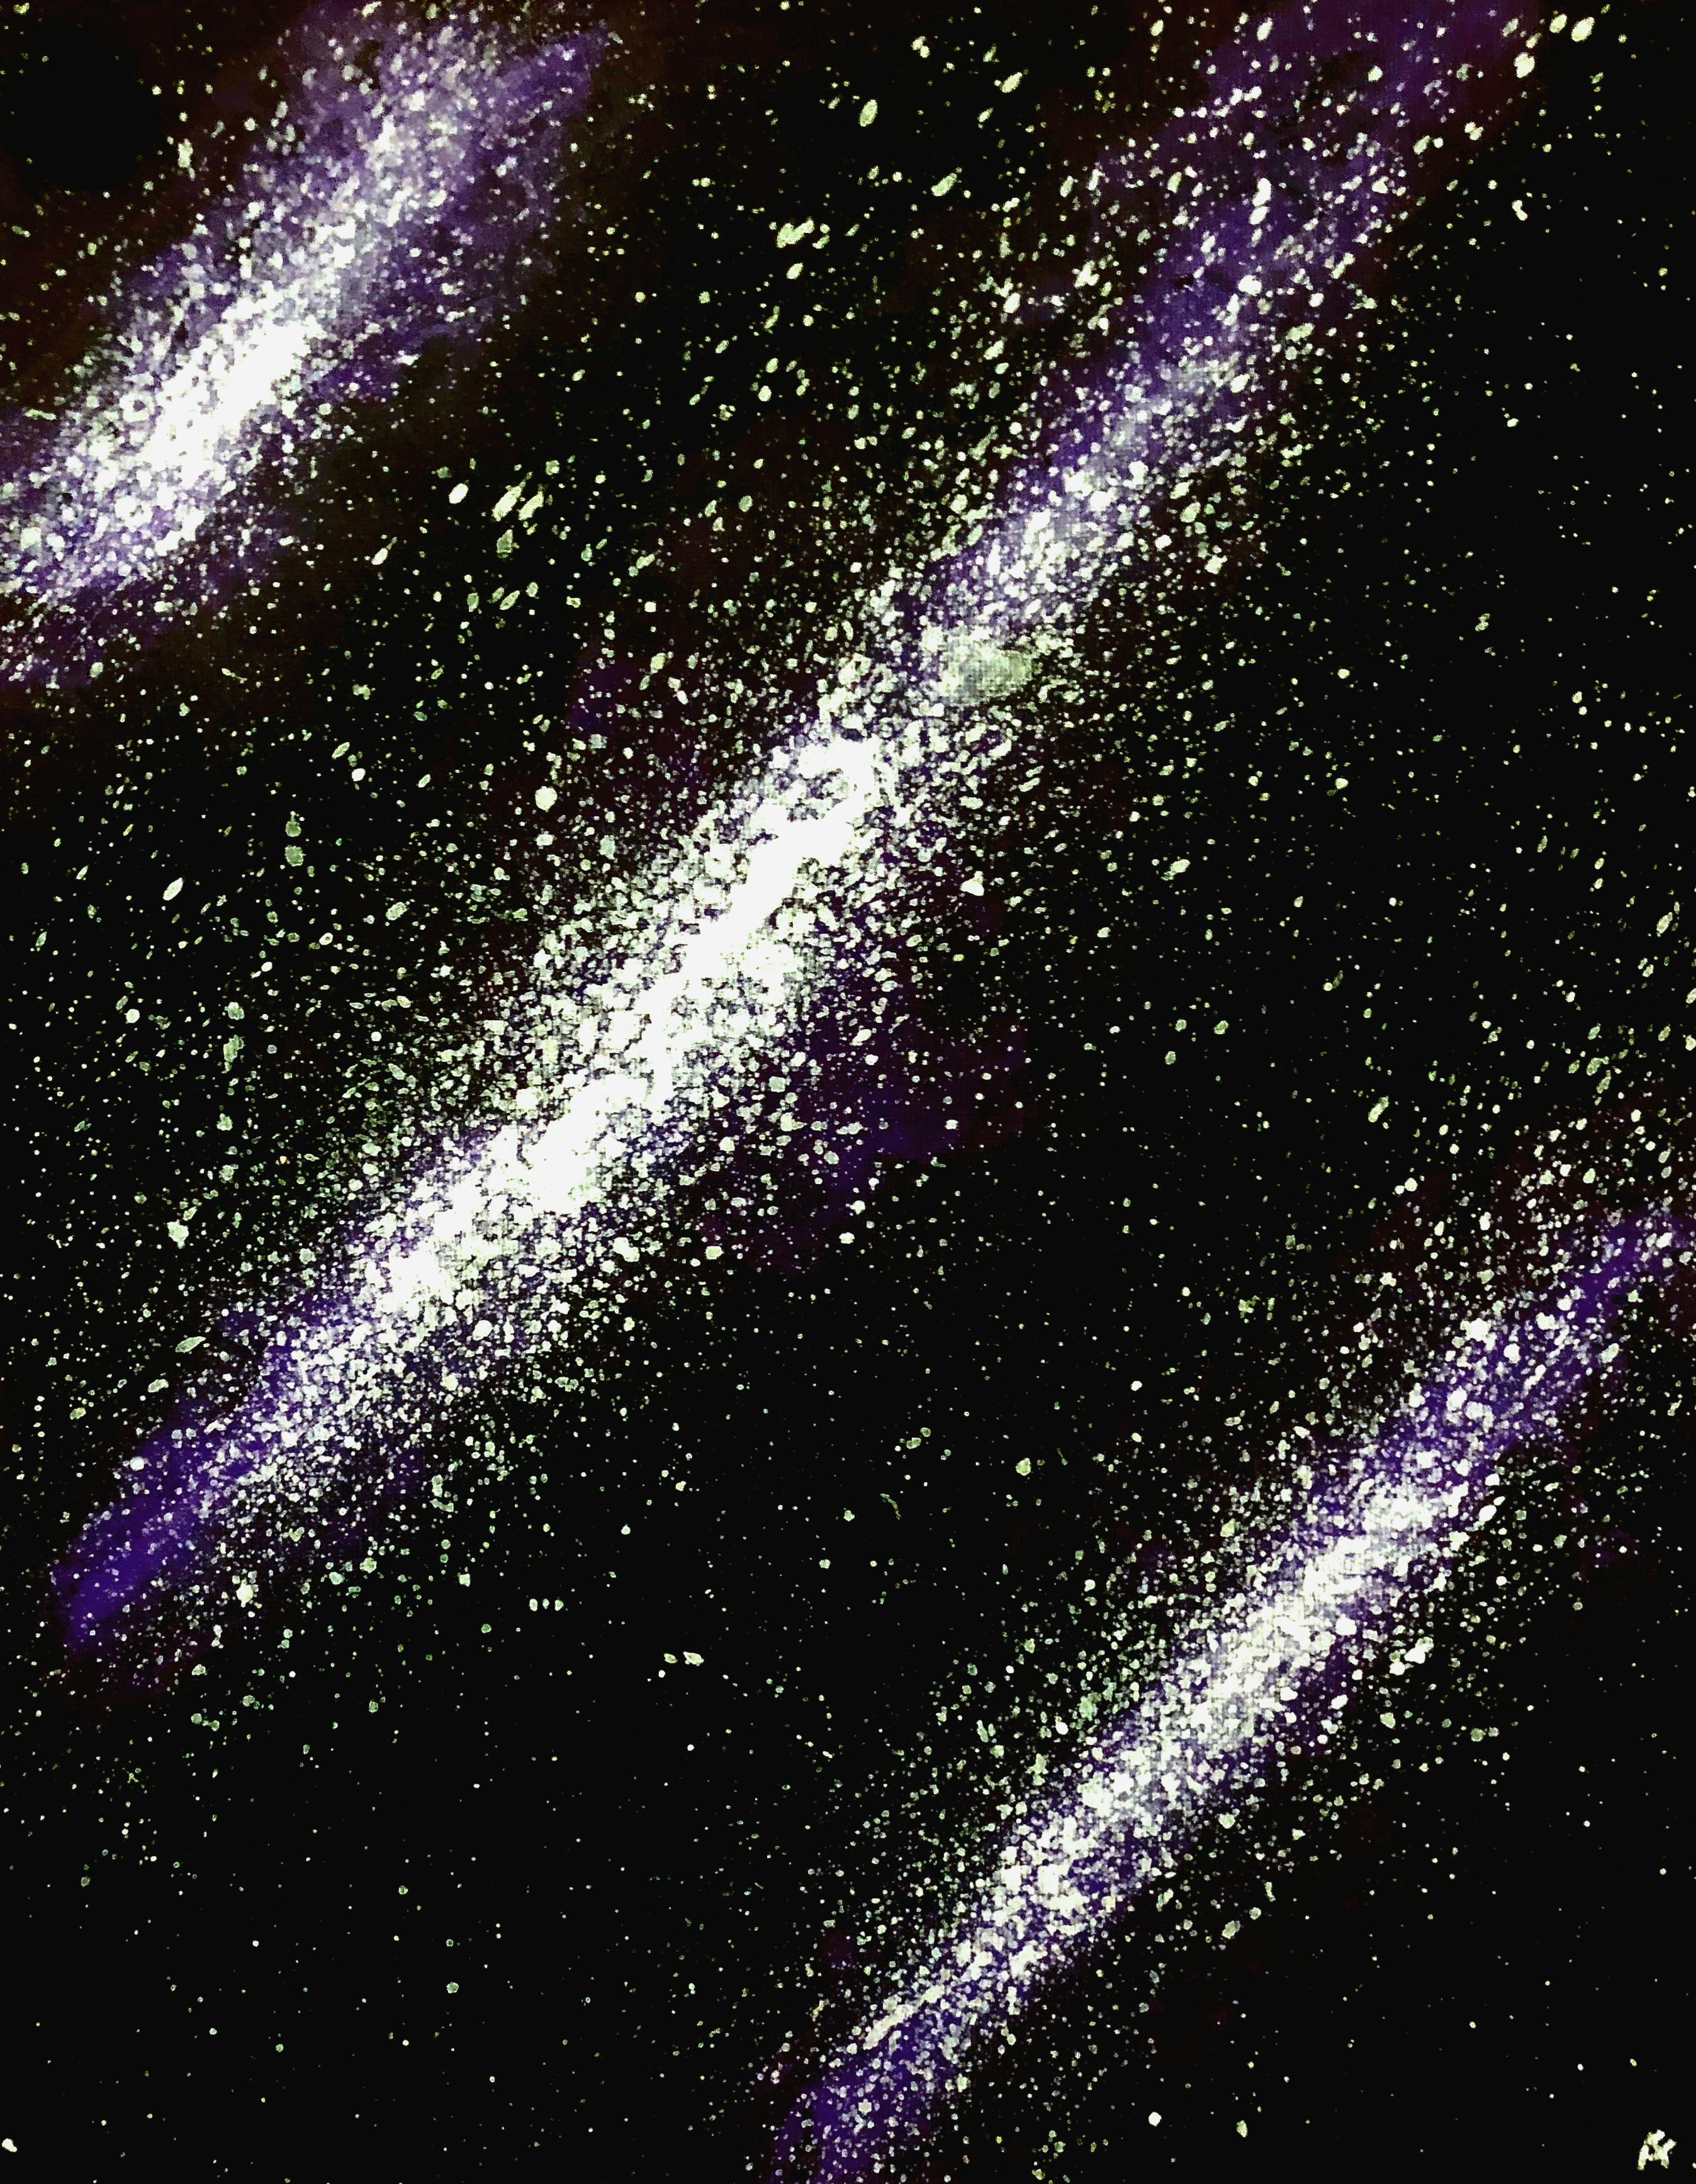 Purple Galaxies (2017). 11 x 14, acrylic on canvas.